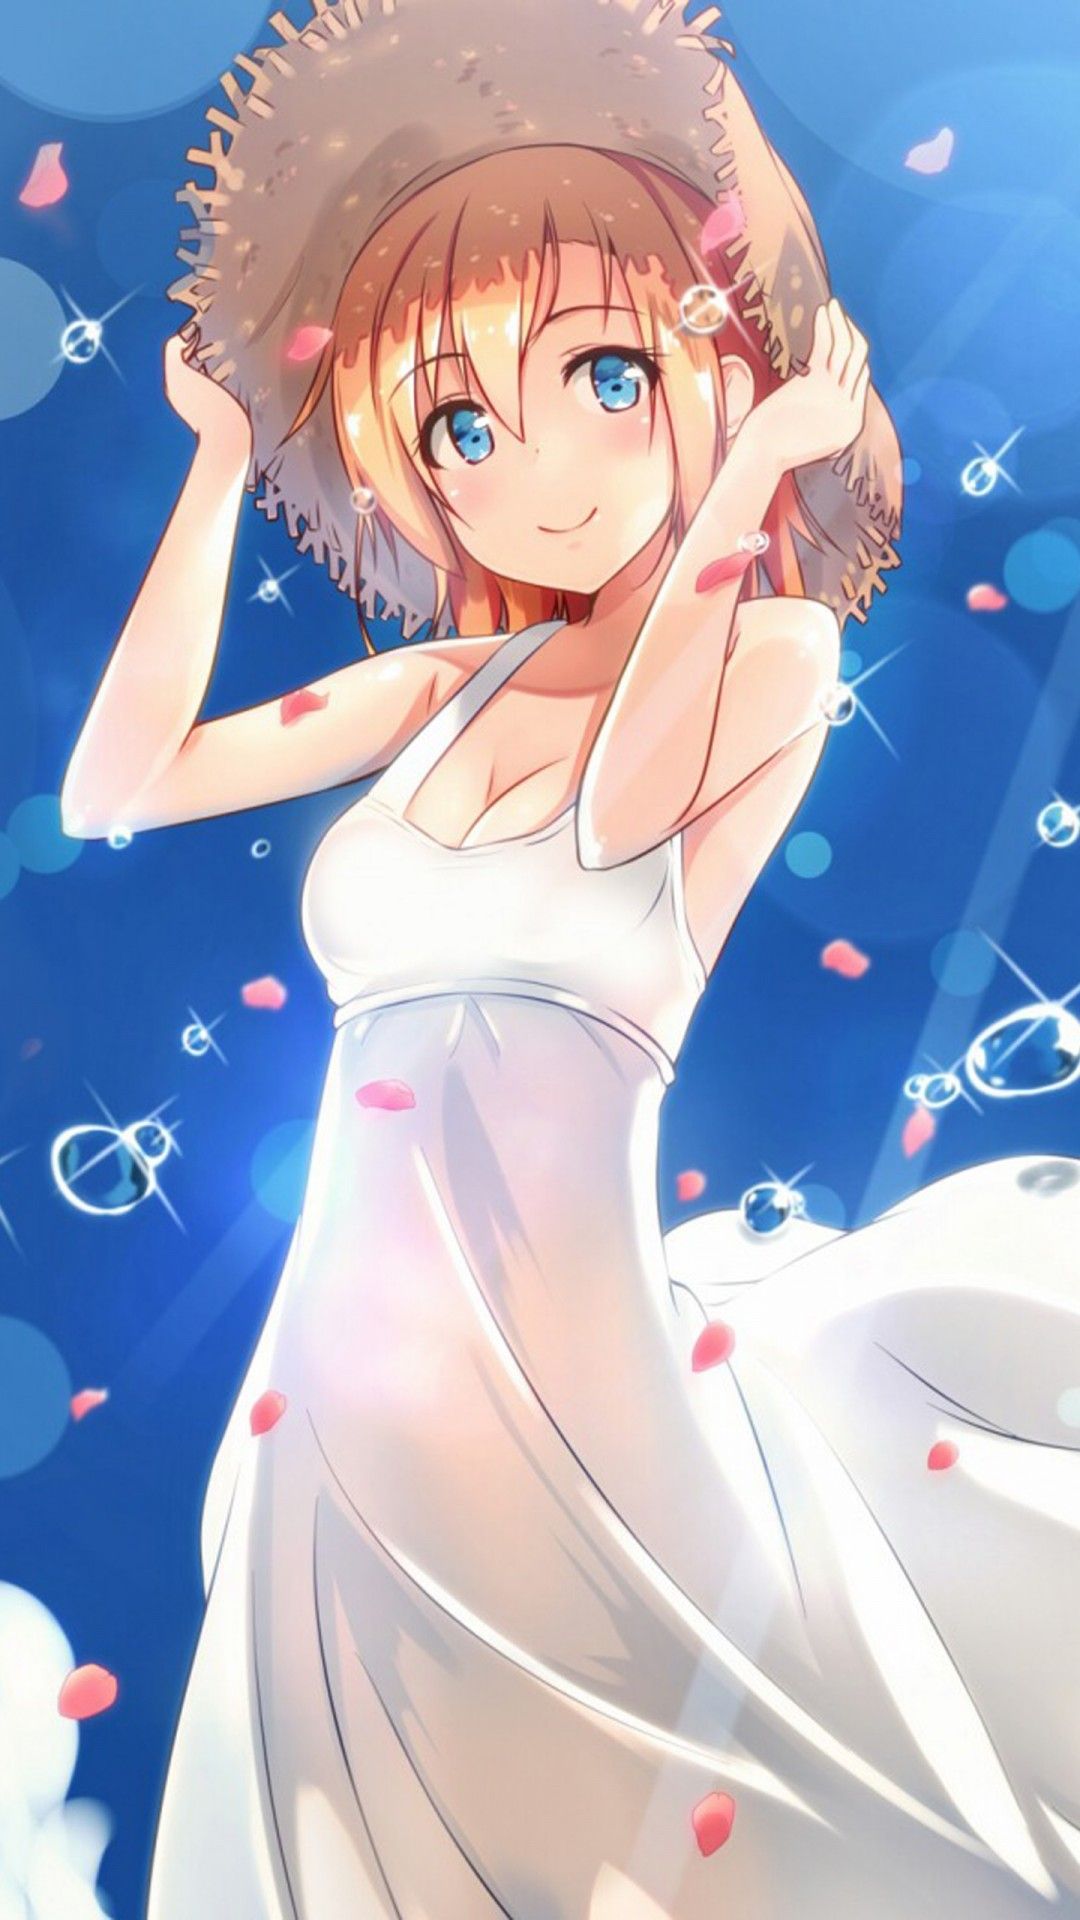 Anime Girl iPhone Wallpaper